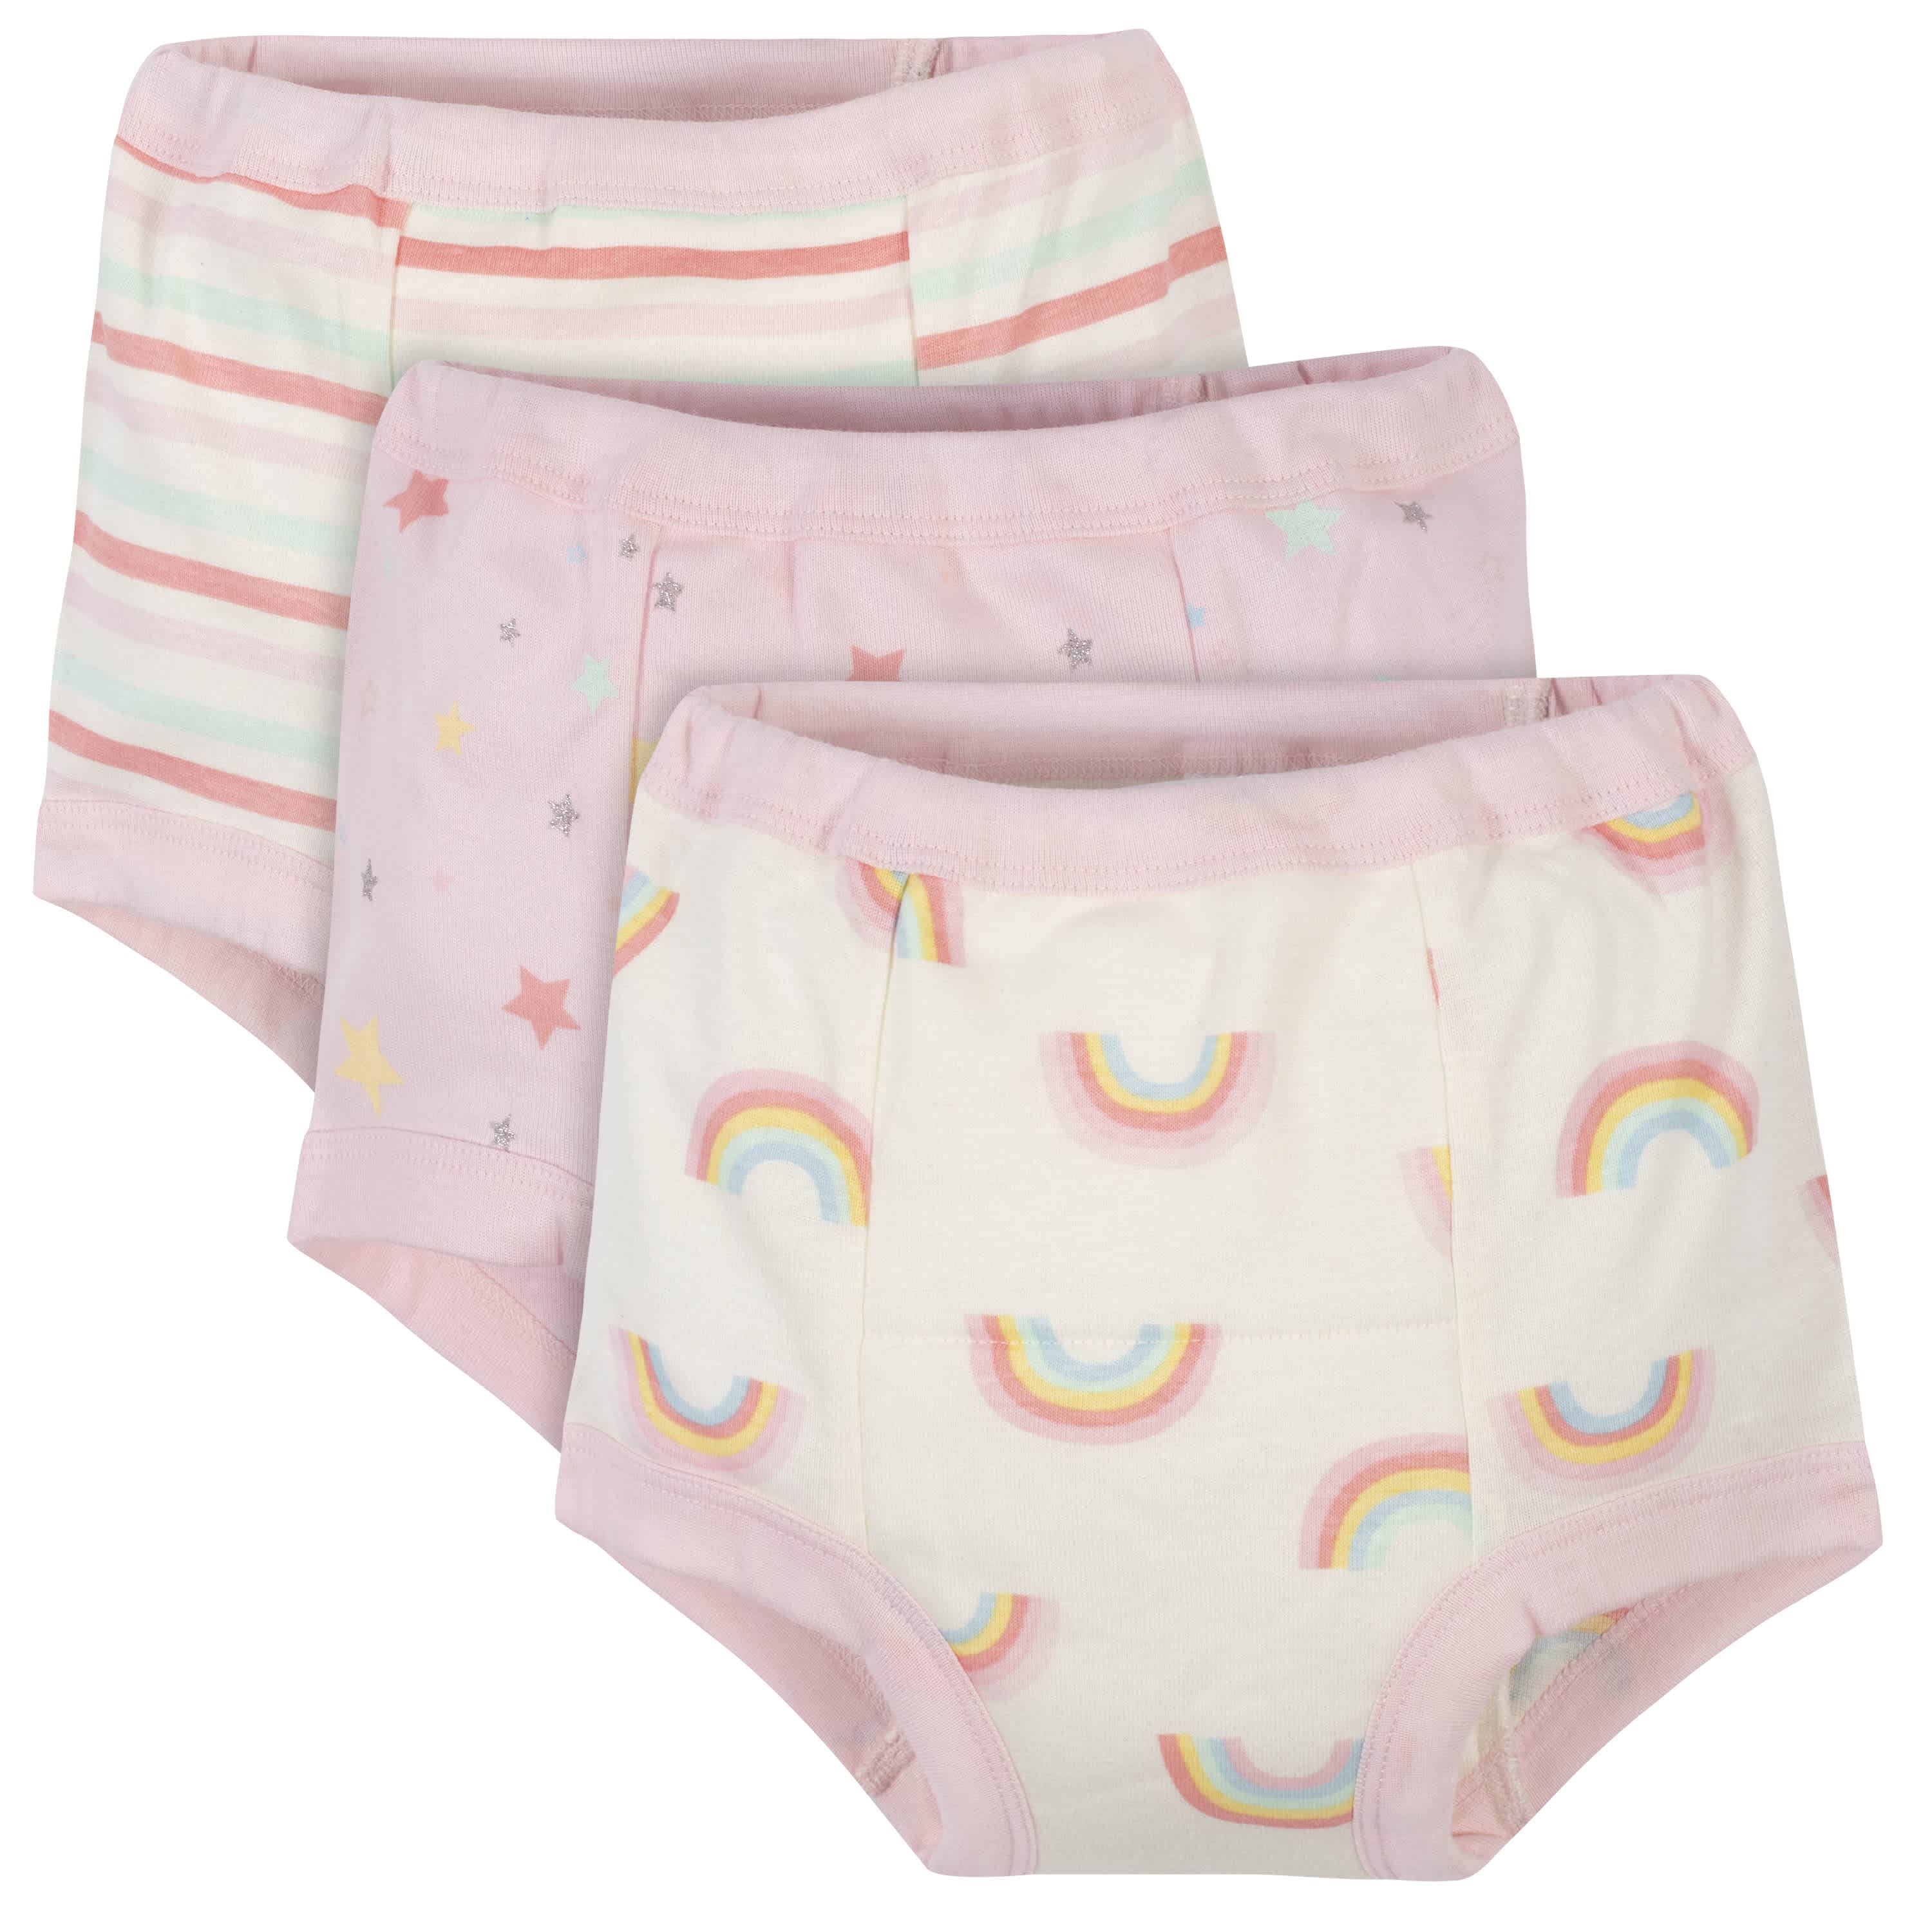 3T Gerber cotton padded training undies (14 pair total) - Girls accessories